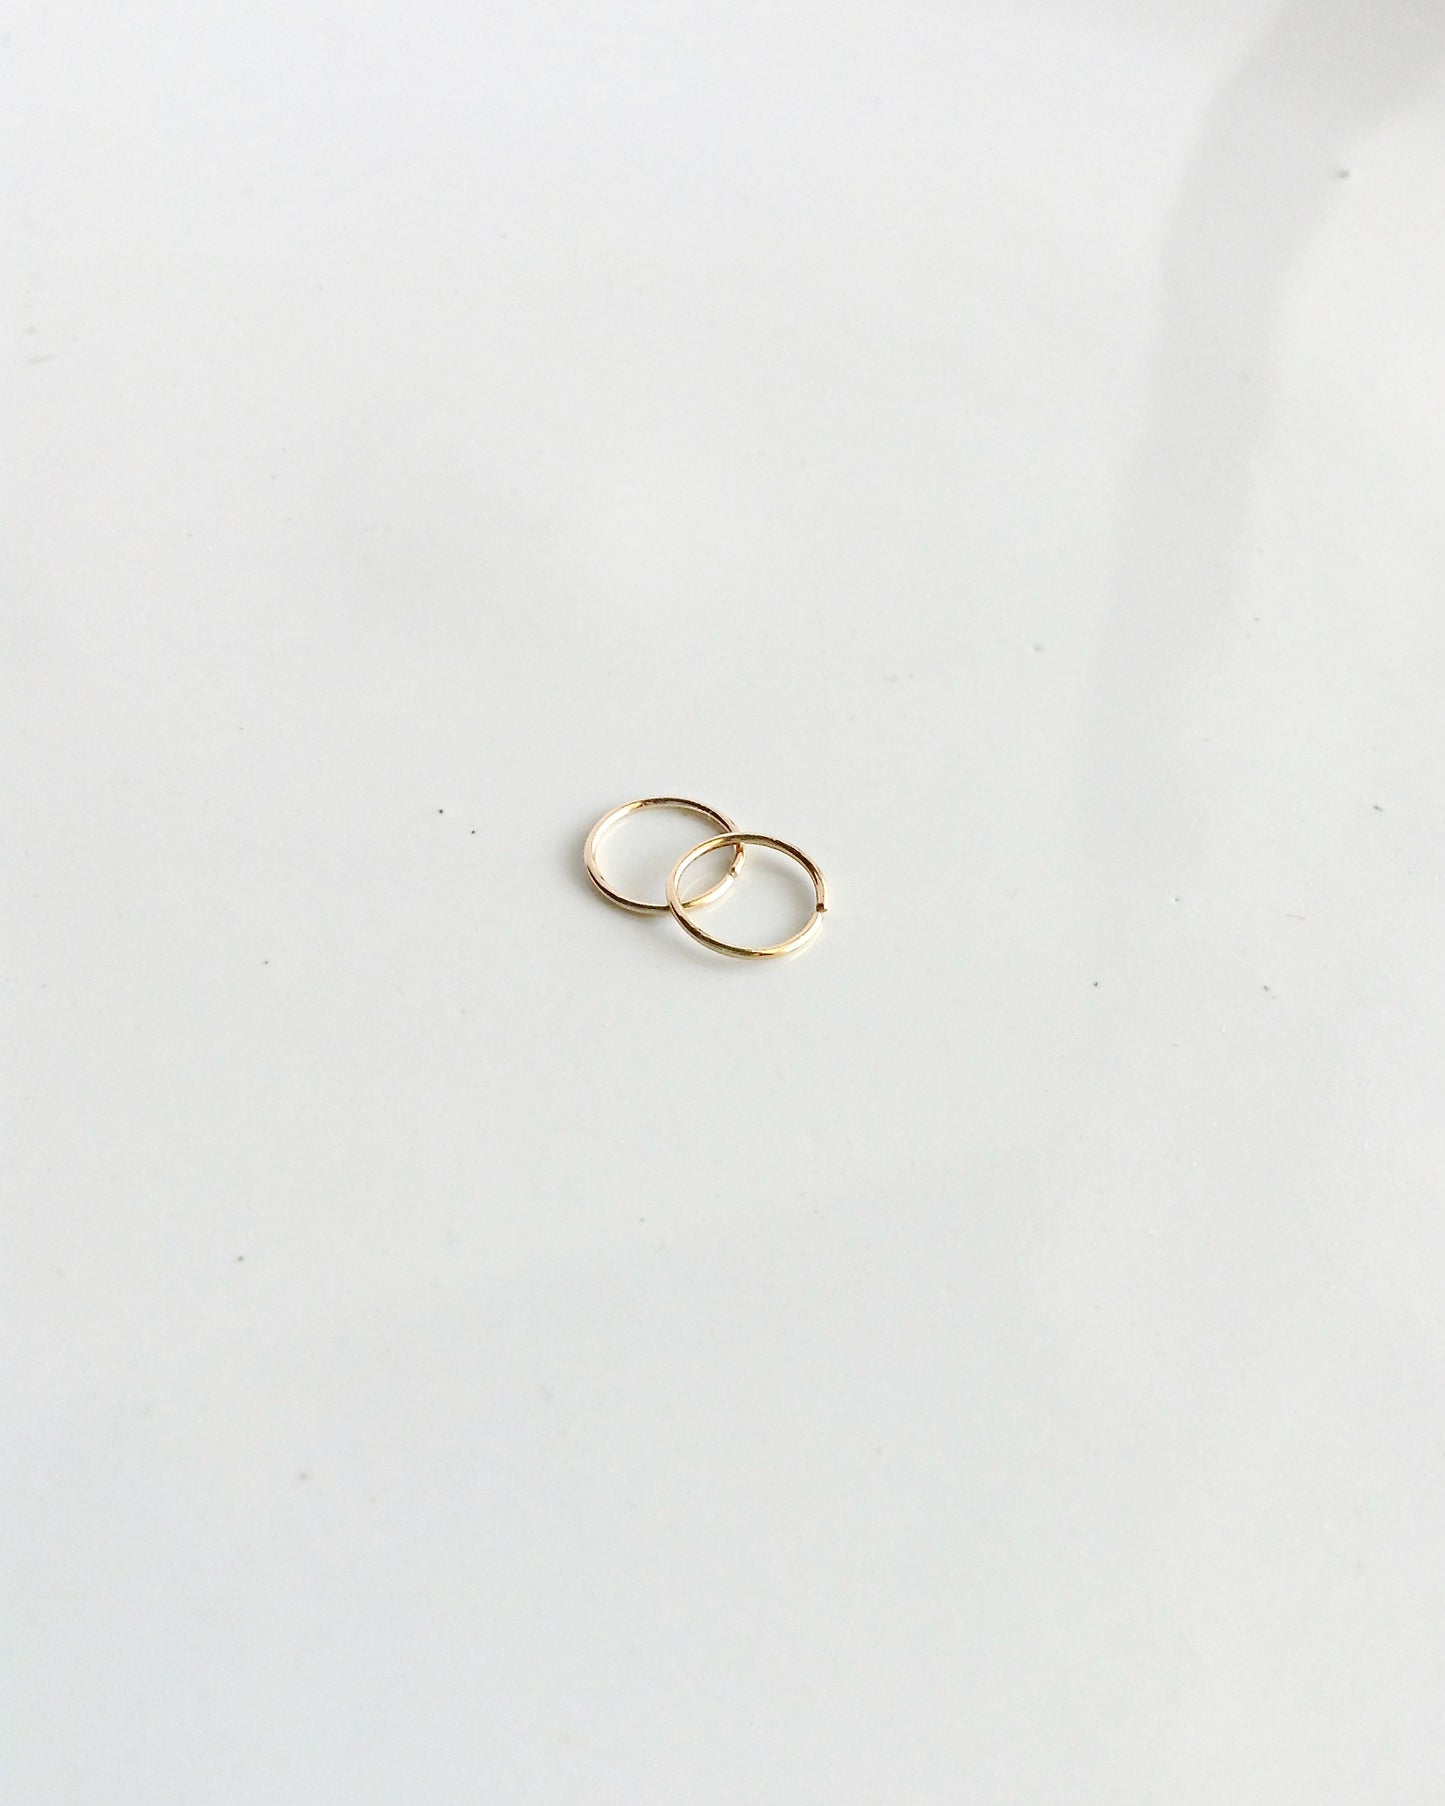 Mini Huggie Hoops in Gold Filled or Sterling Silver | Simple Everyday Earrings | IB Jewelry